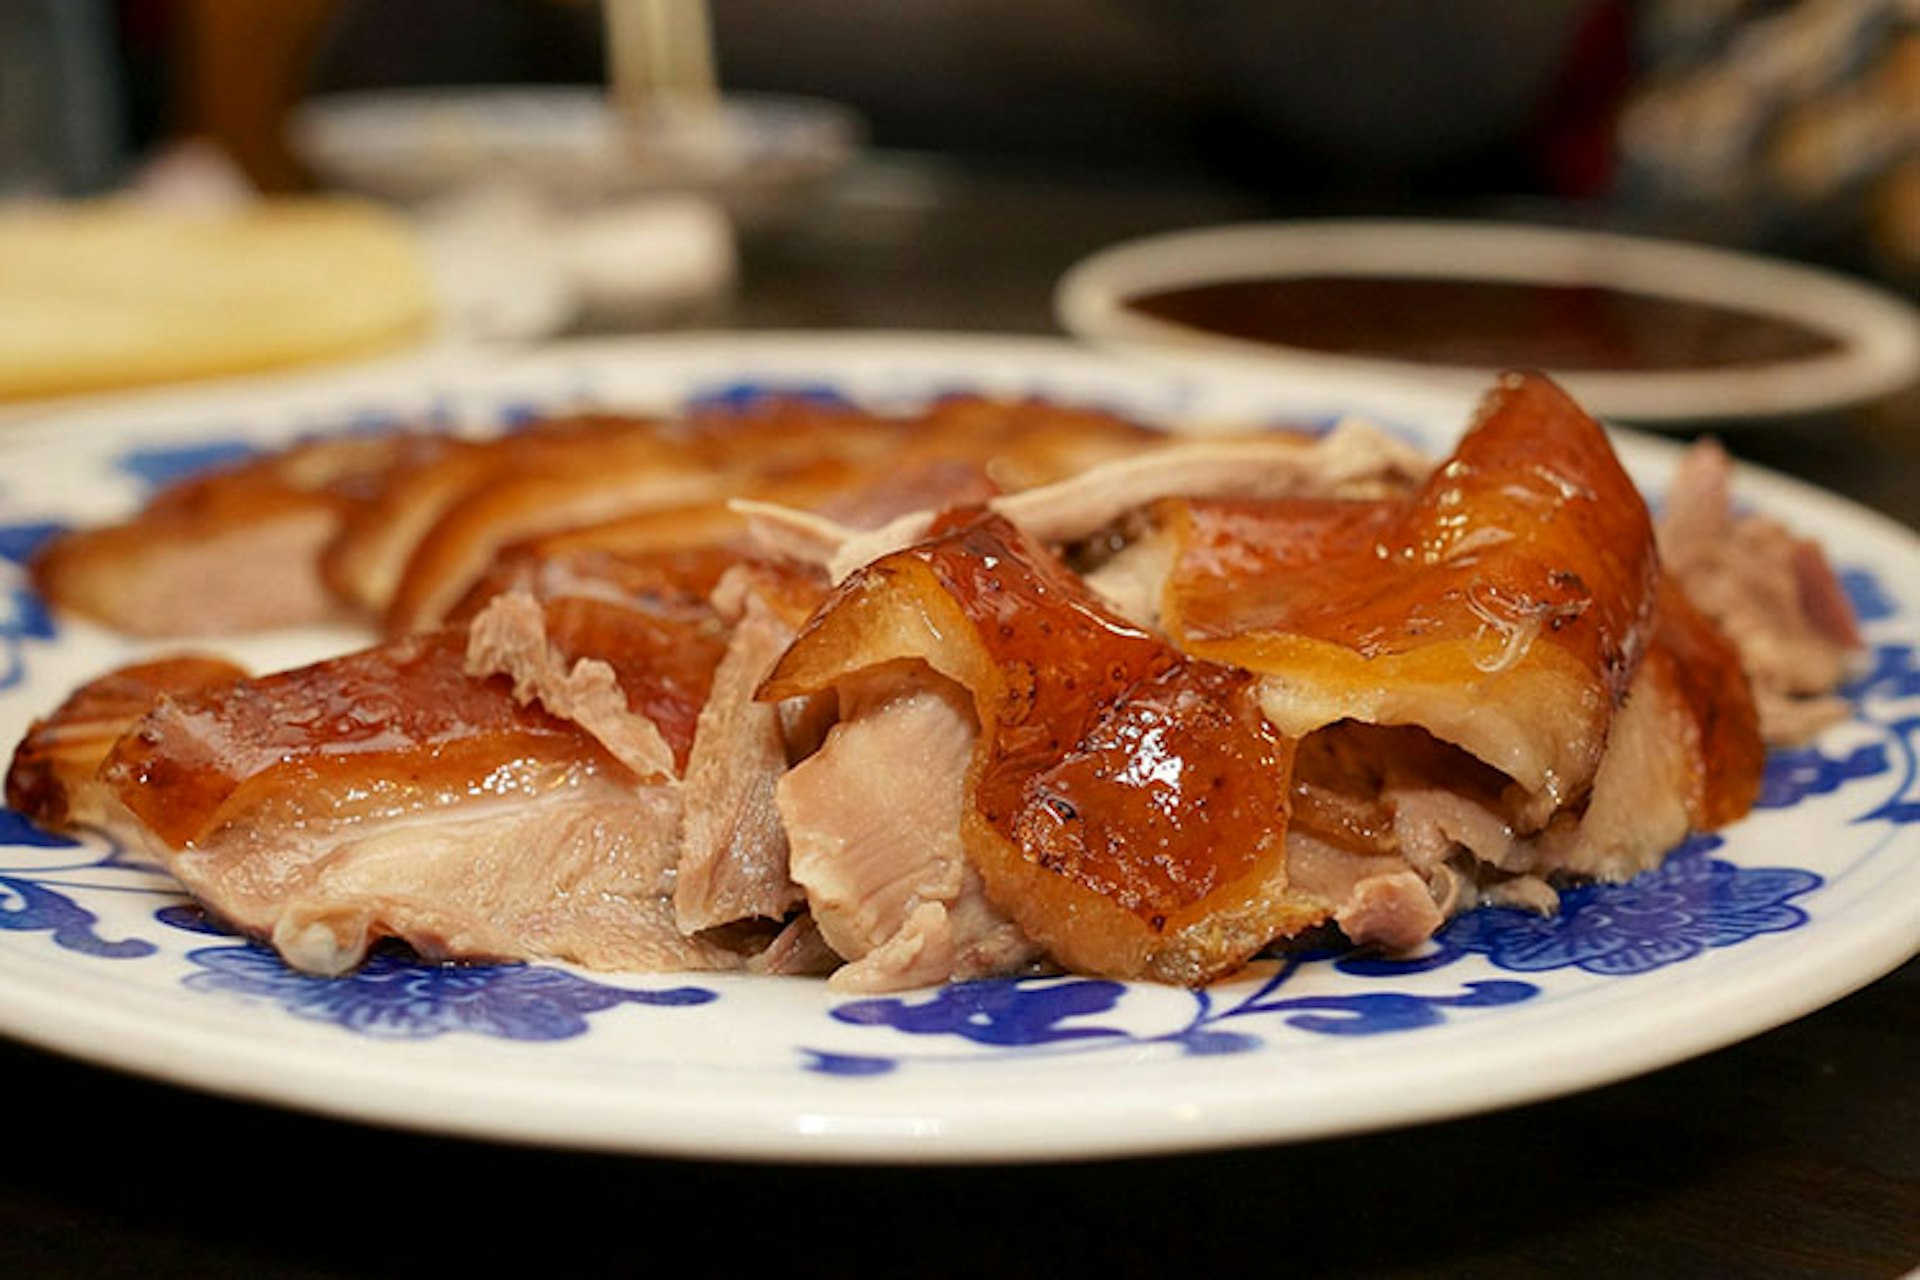 Crispy roast duck at Liqun Roast Duck Restaurant. Image by David Gordillo / CC BY-SA 2.0